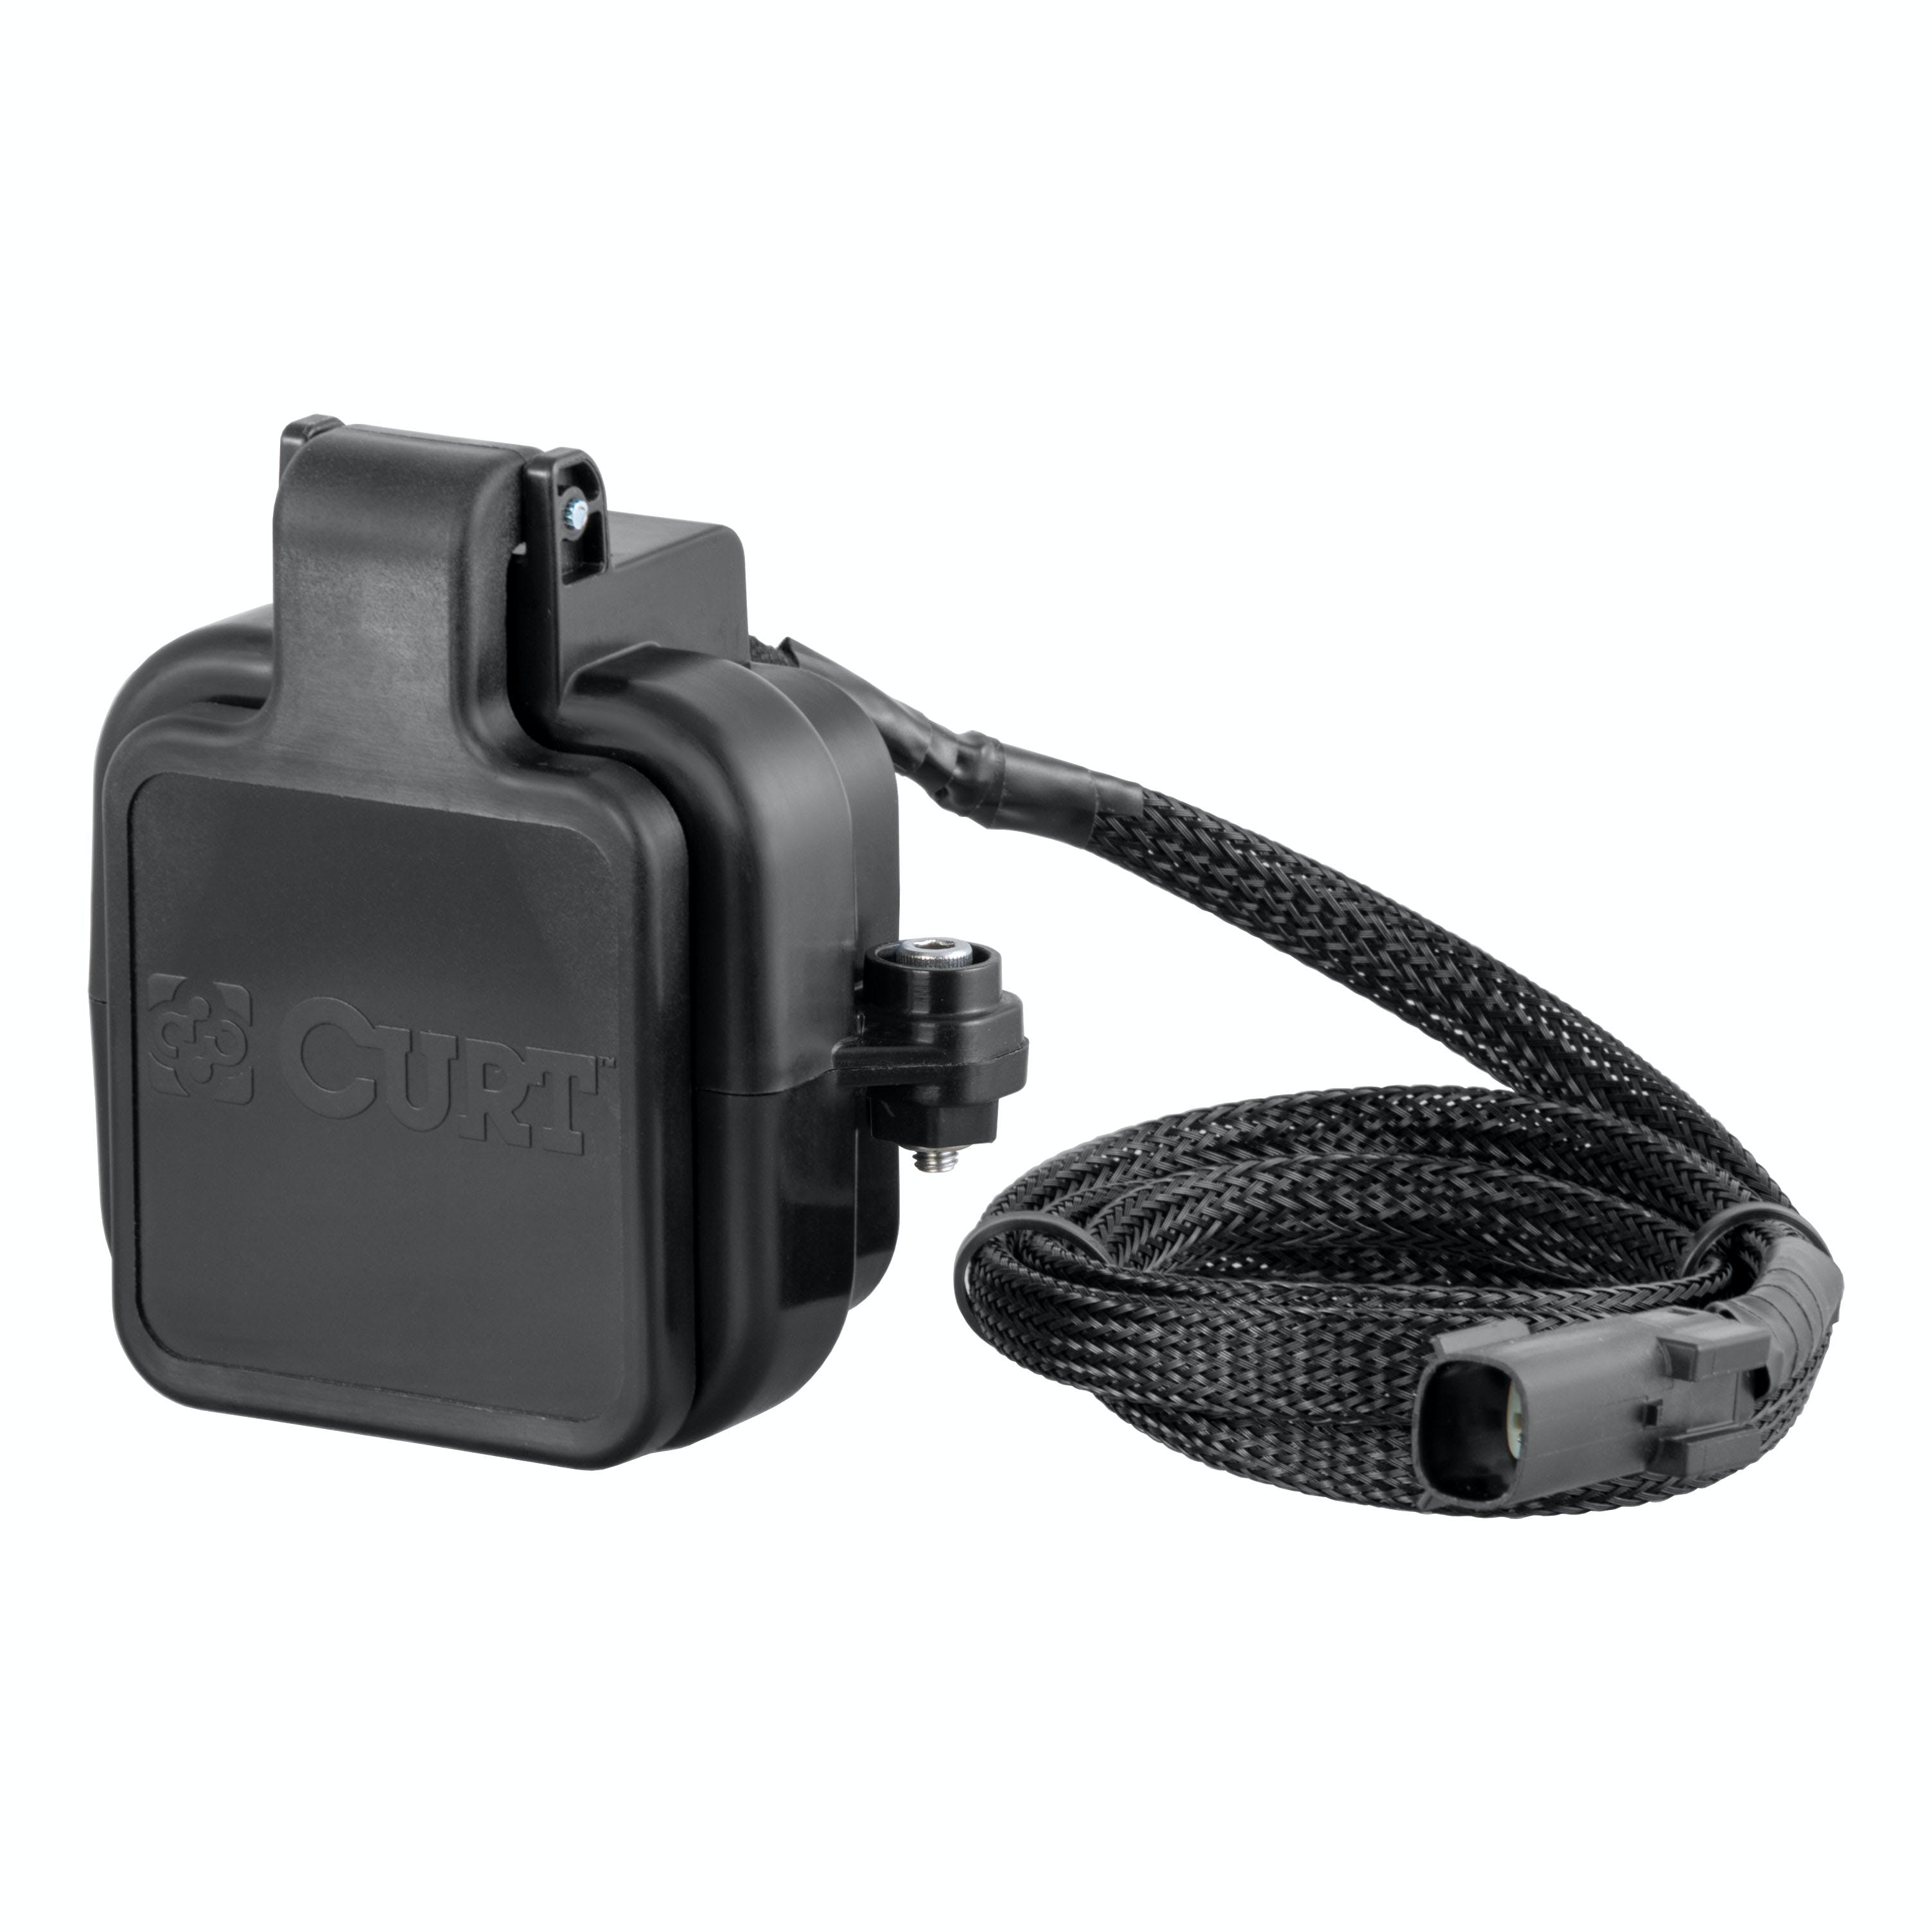 CURT 58265 Protective MultiPro / Multi-Flex Tailgate Sensor with 2 Hitch Cap